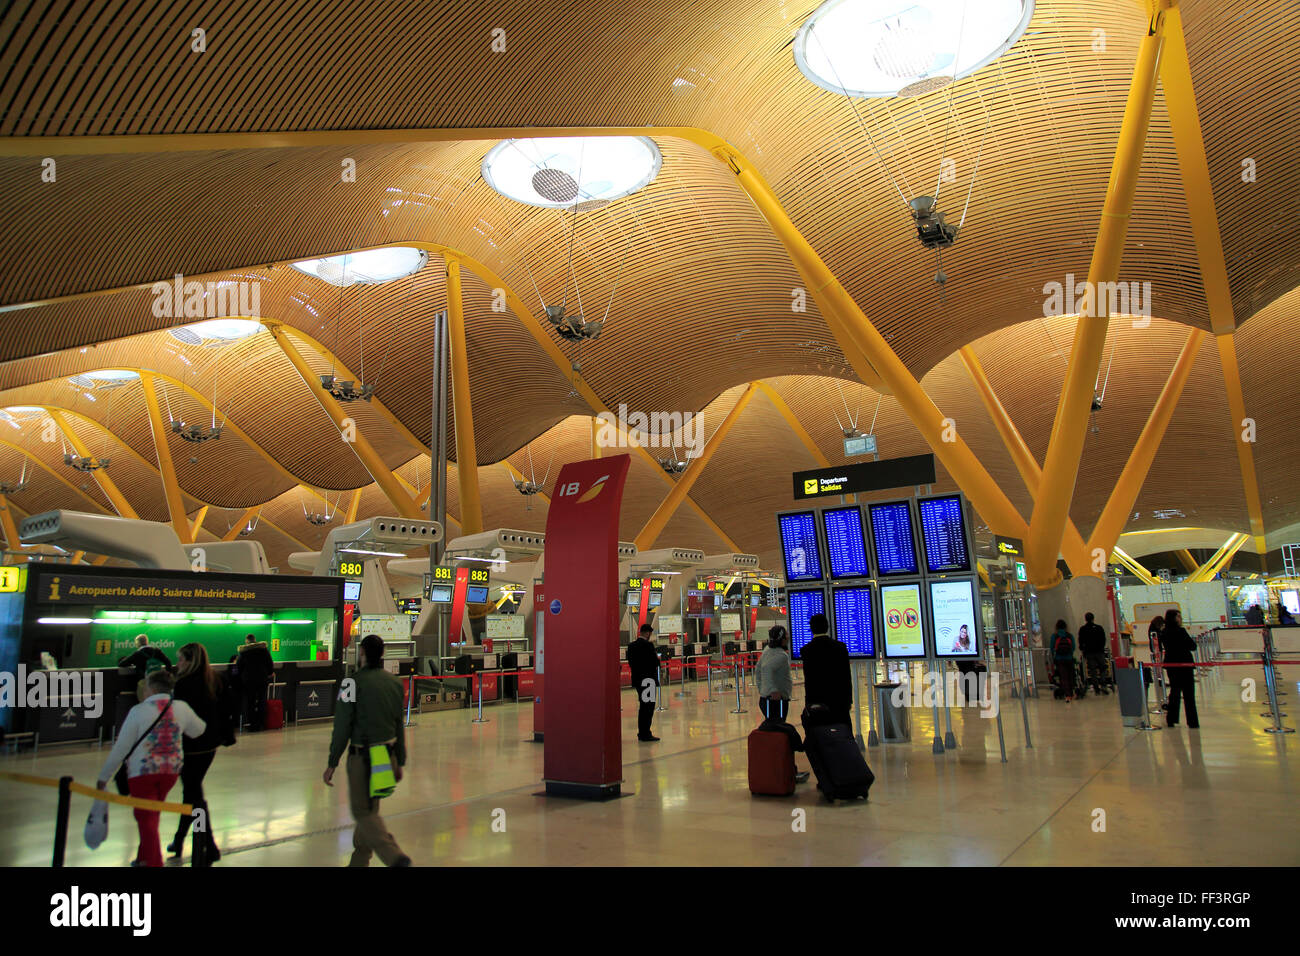 La moderna architettura interna del terminale 4 edificio, Adolfo Suárez Madrid-barajas airport, Madrid, Spagna Foto Stock